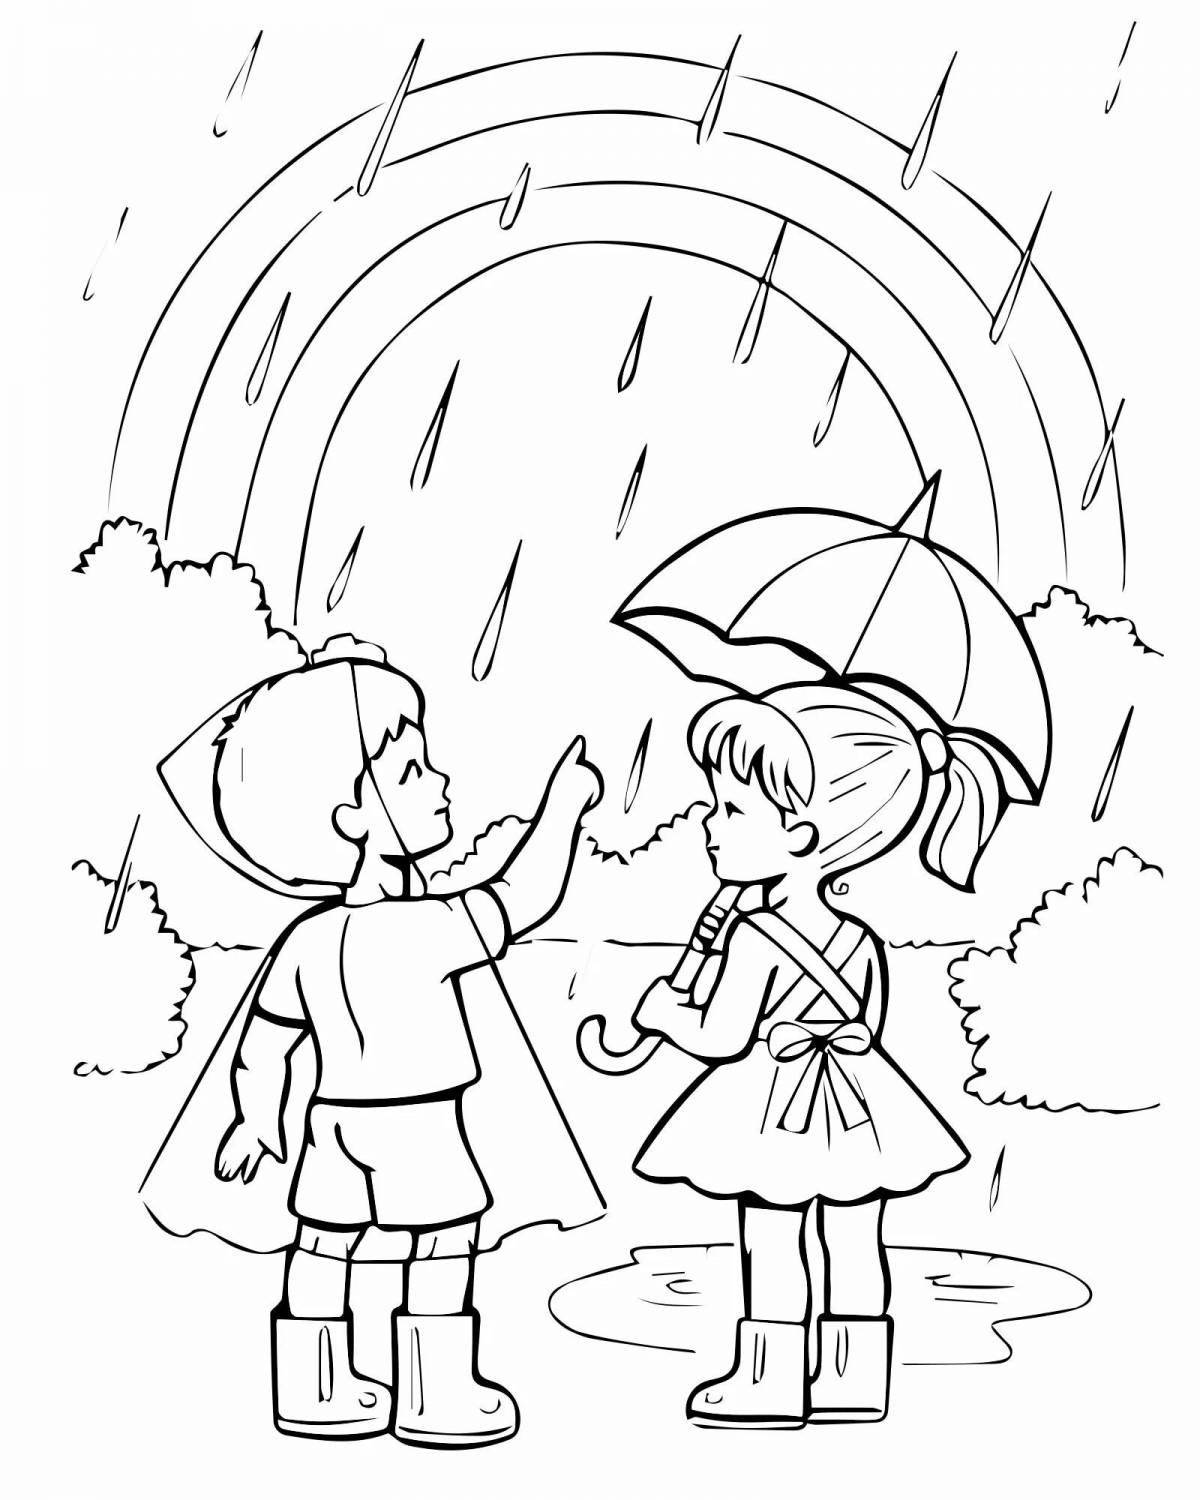 Shining rain coloring book for kids